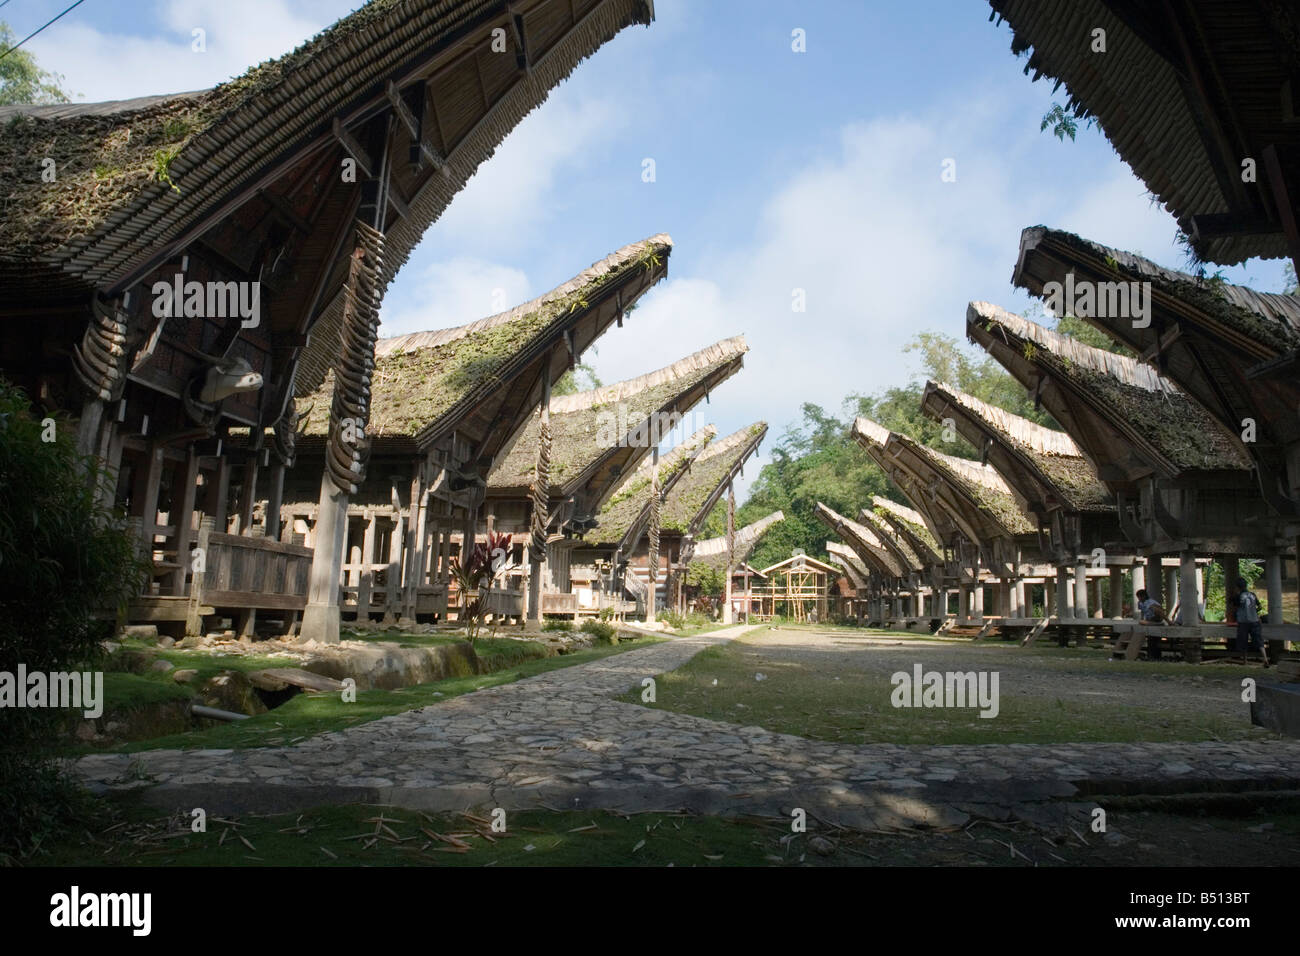 Traditional Torajan houses at Ke'te Kesu (Sulawesi - Indonesia). Maisons traditionnelles du pays Toraja (Sulawesi - Indonésie). Stock Photo